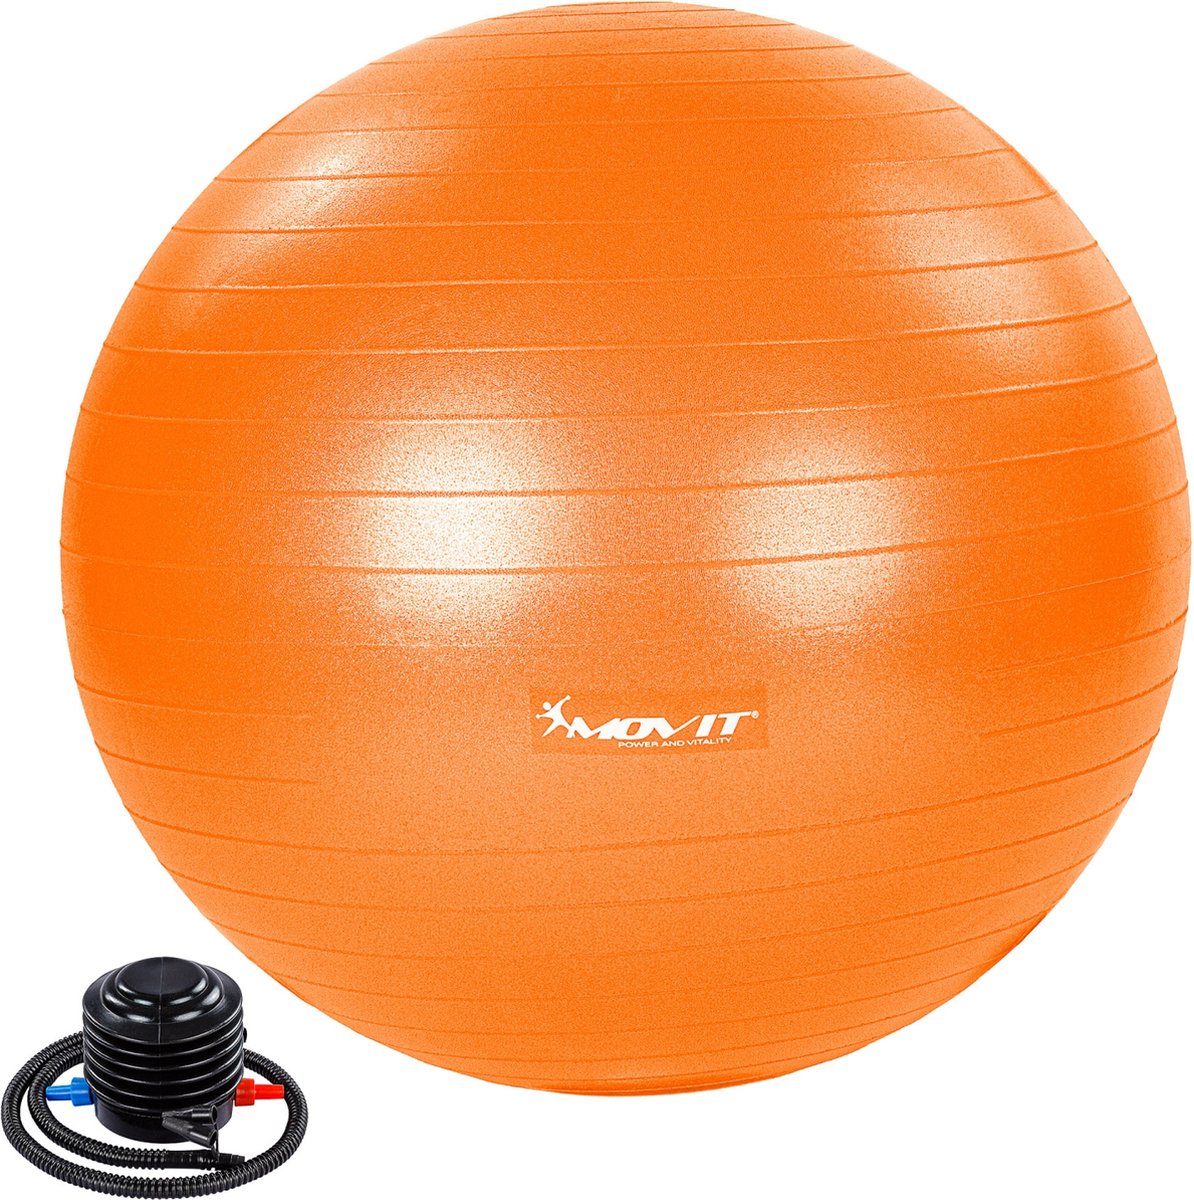 Yoga - Yoga bal - Pilates bal - Yoga bal 55 cm - Fitness bal - Fitness bal 55 cm - Inclusief pomp - Oranje